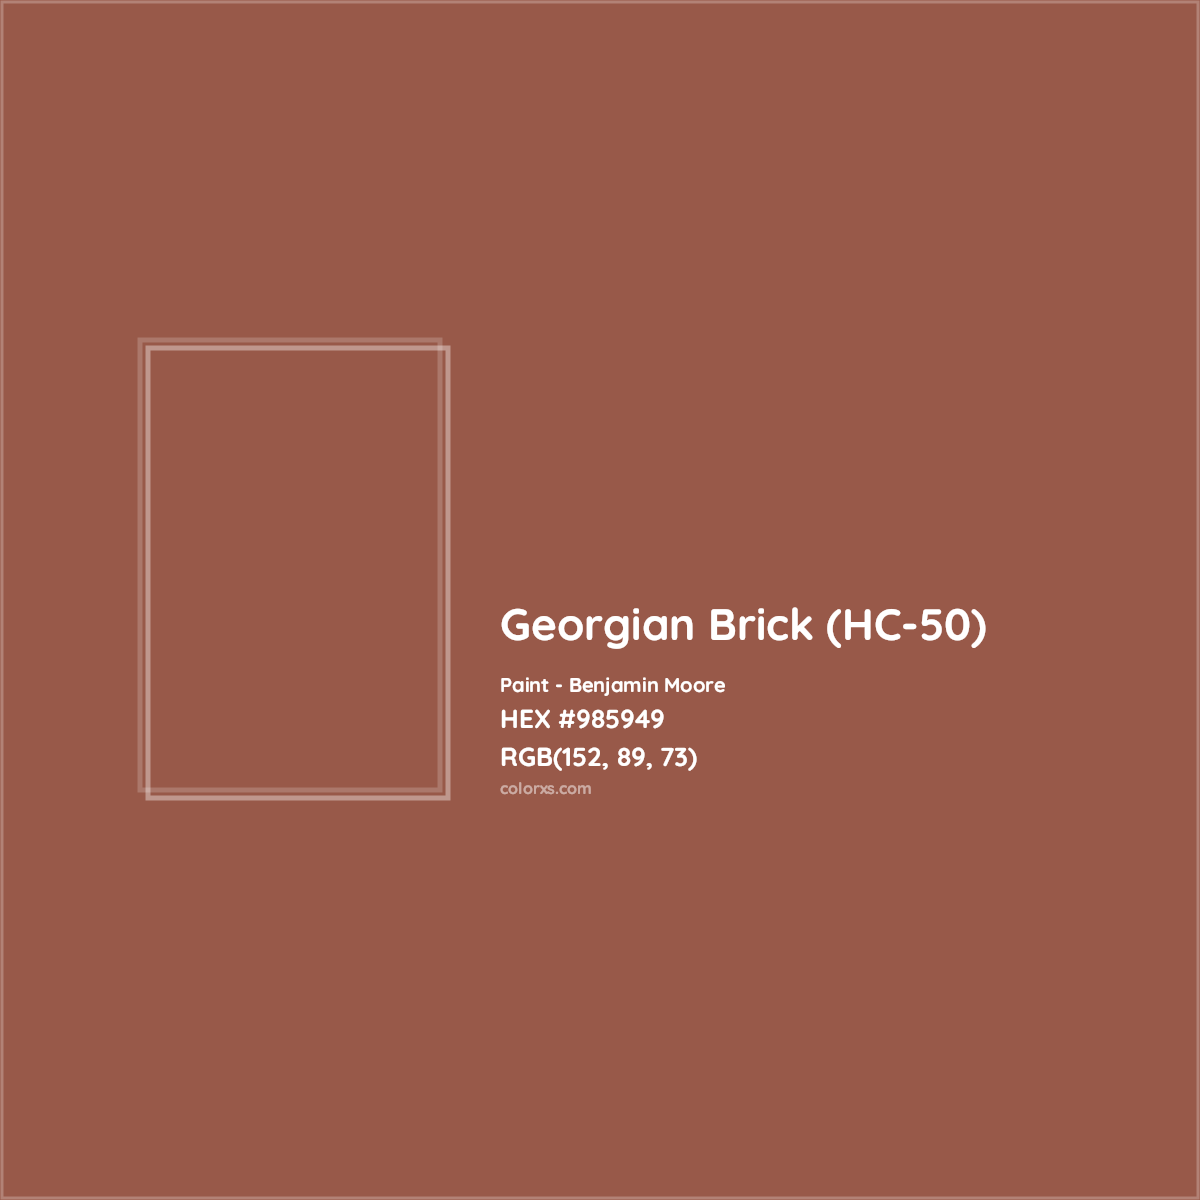 HEX #985949 Georgian Brick (HC-50) Paint Benjamin Moore - Color Code